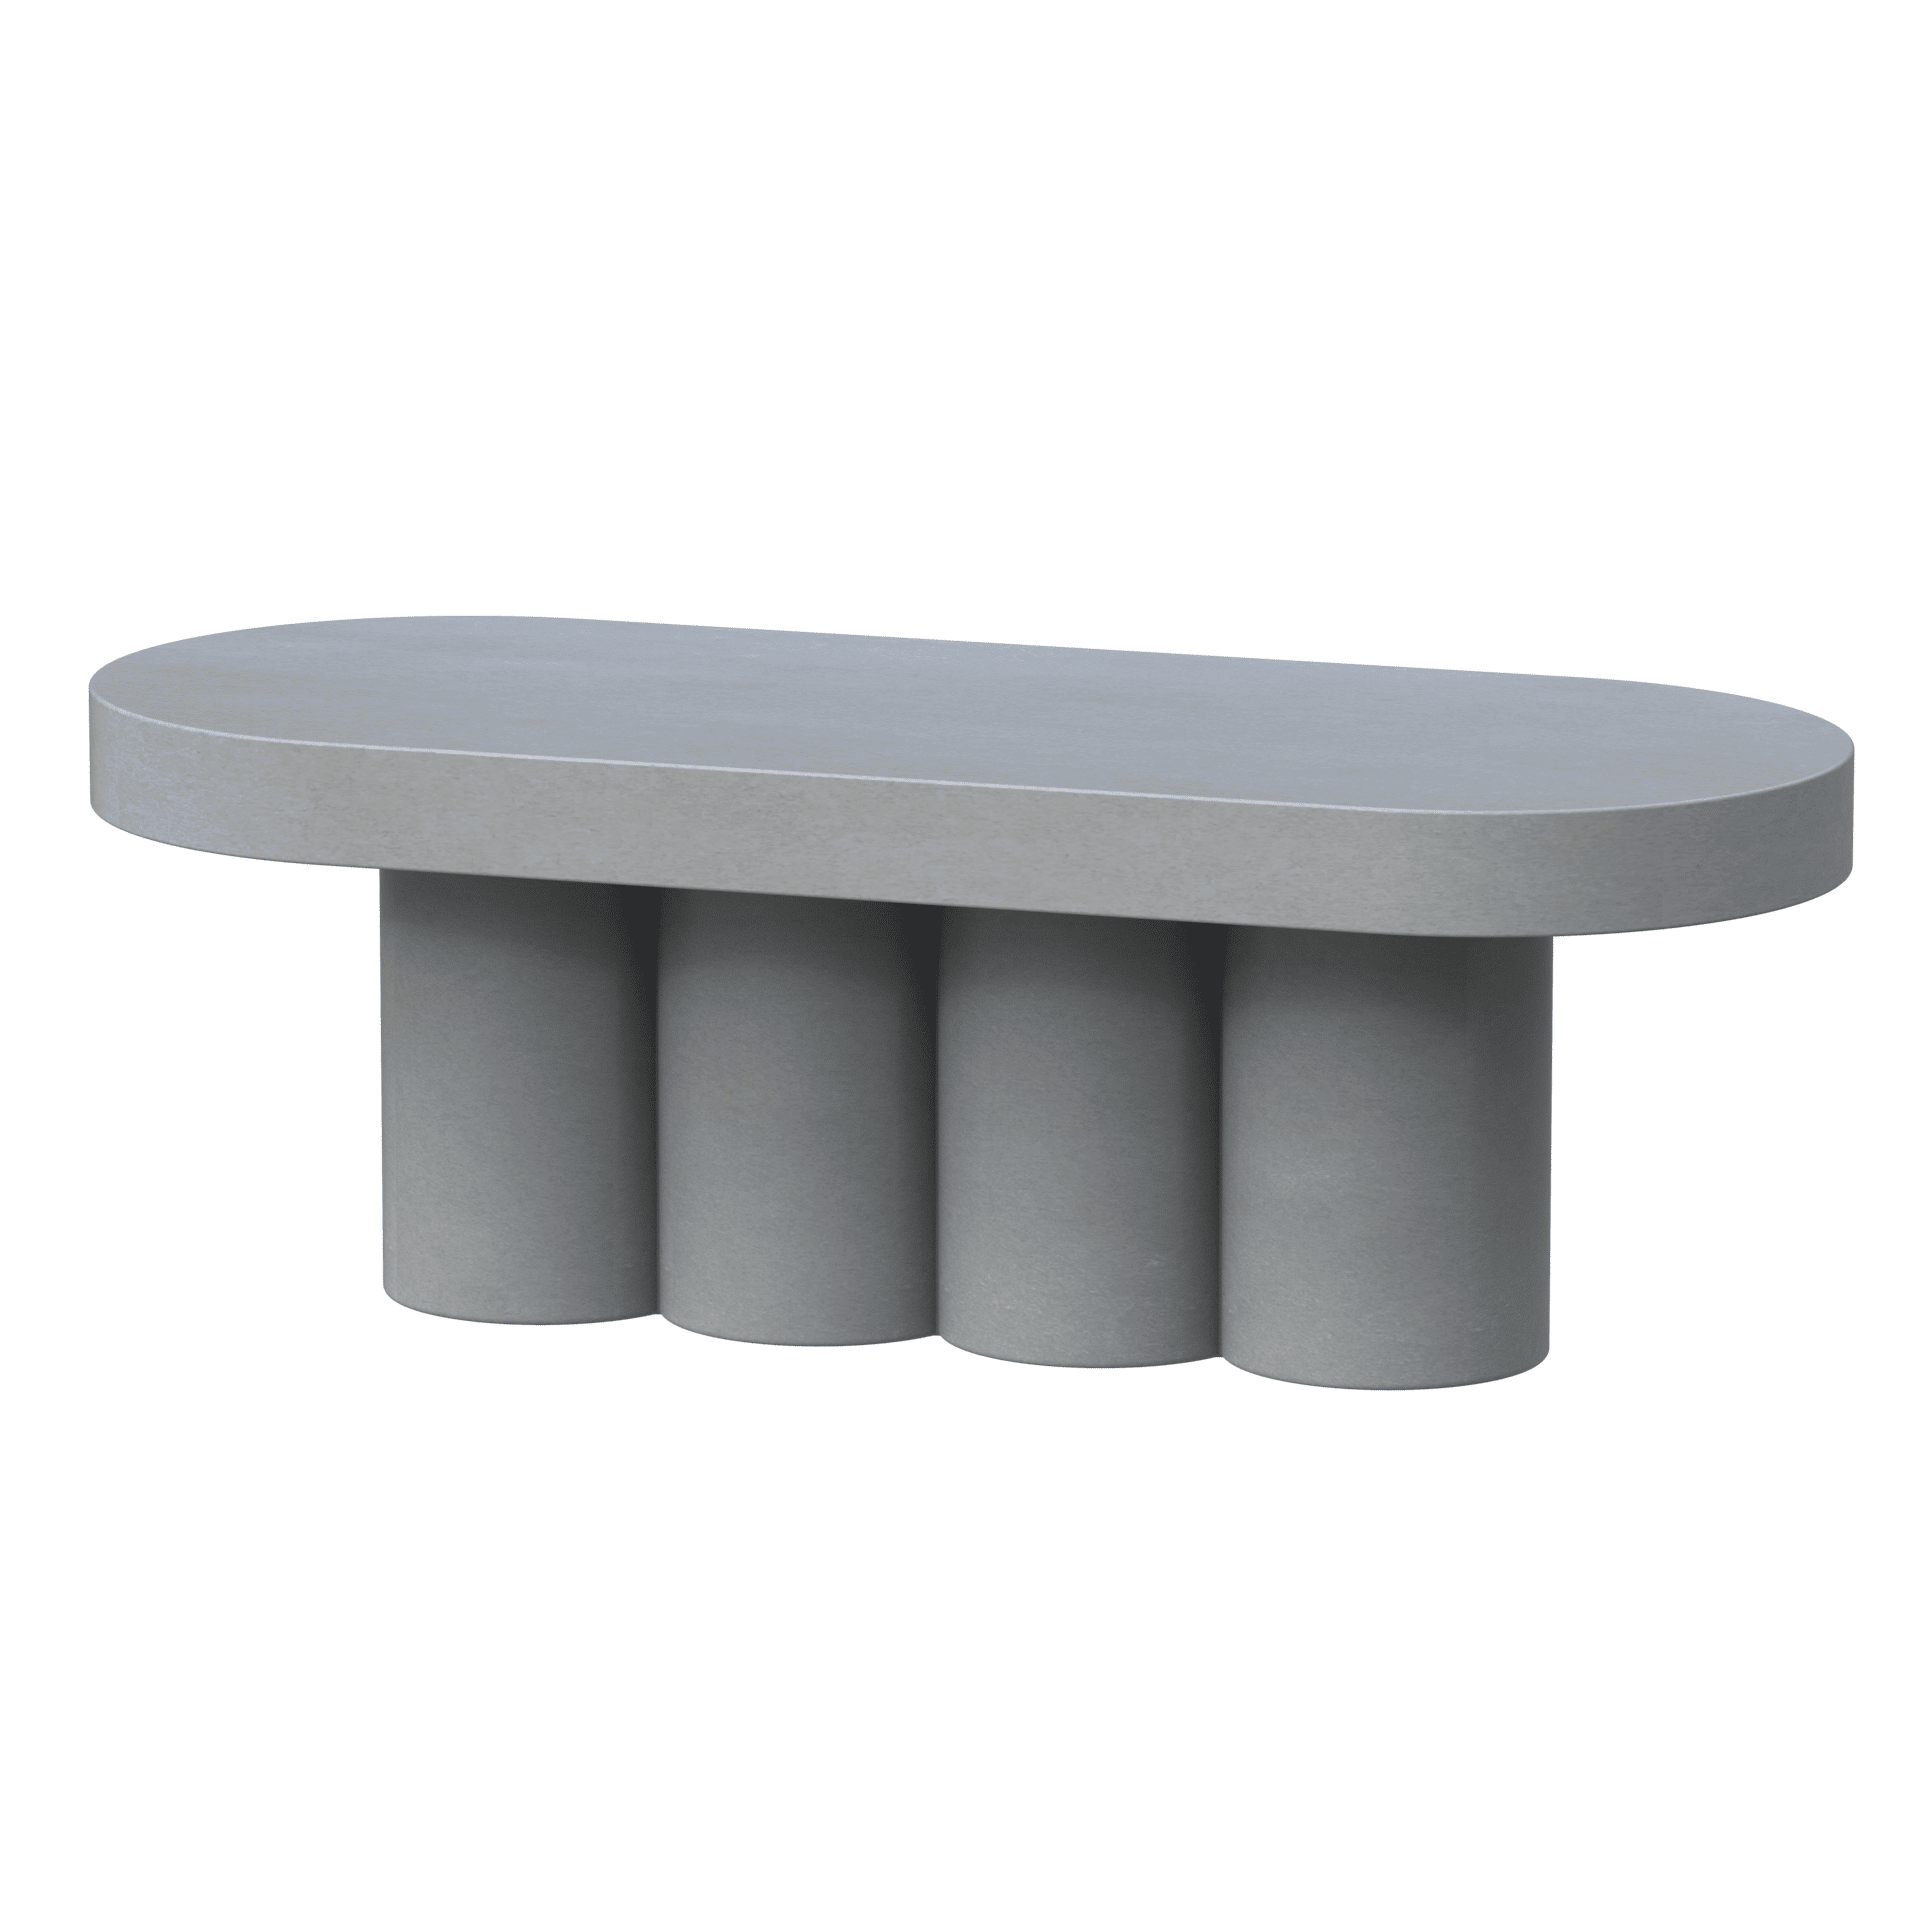 FIND-OVAL-DINING-TABLE-220x90xH76Cm—Medium-Grey